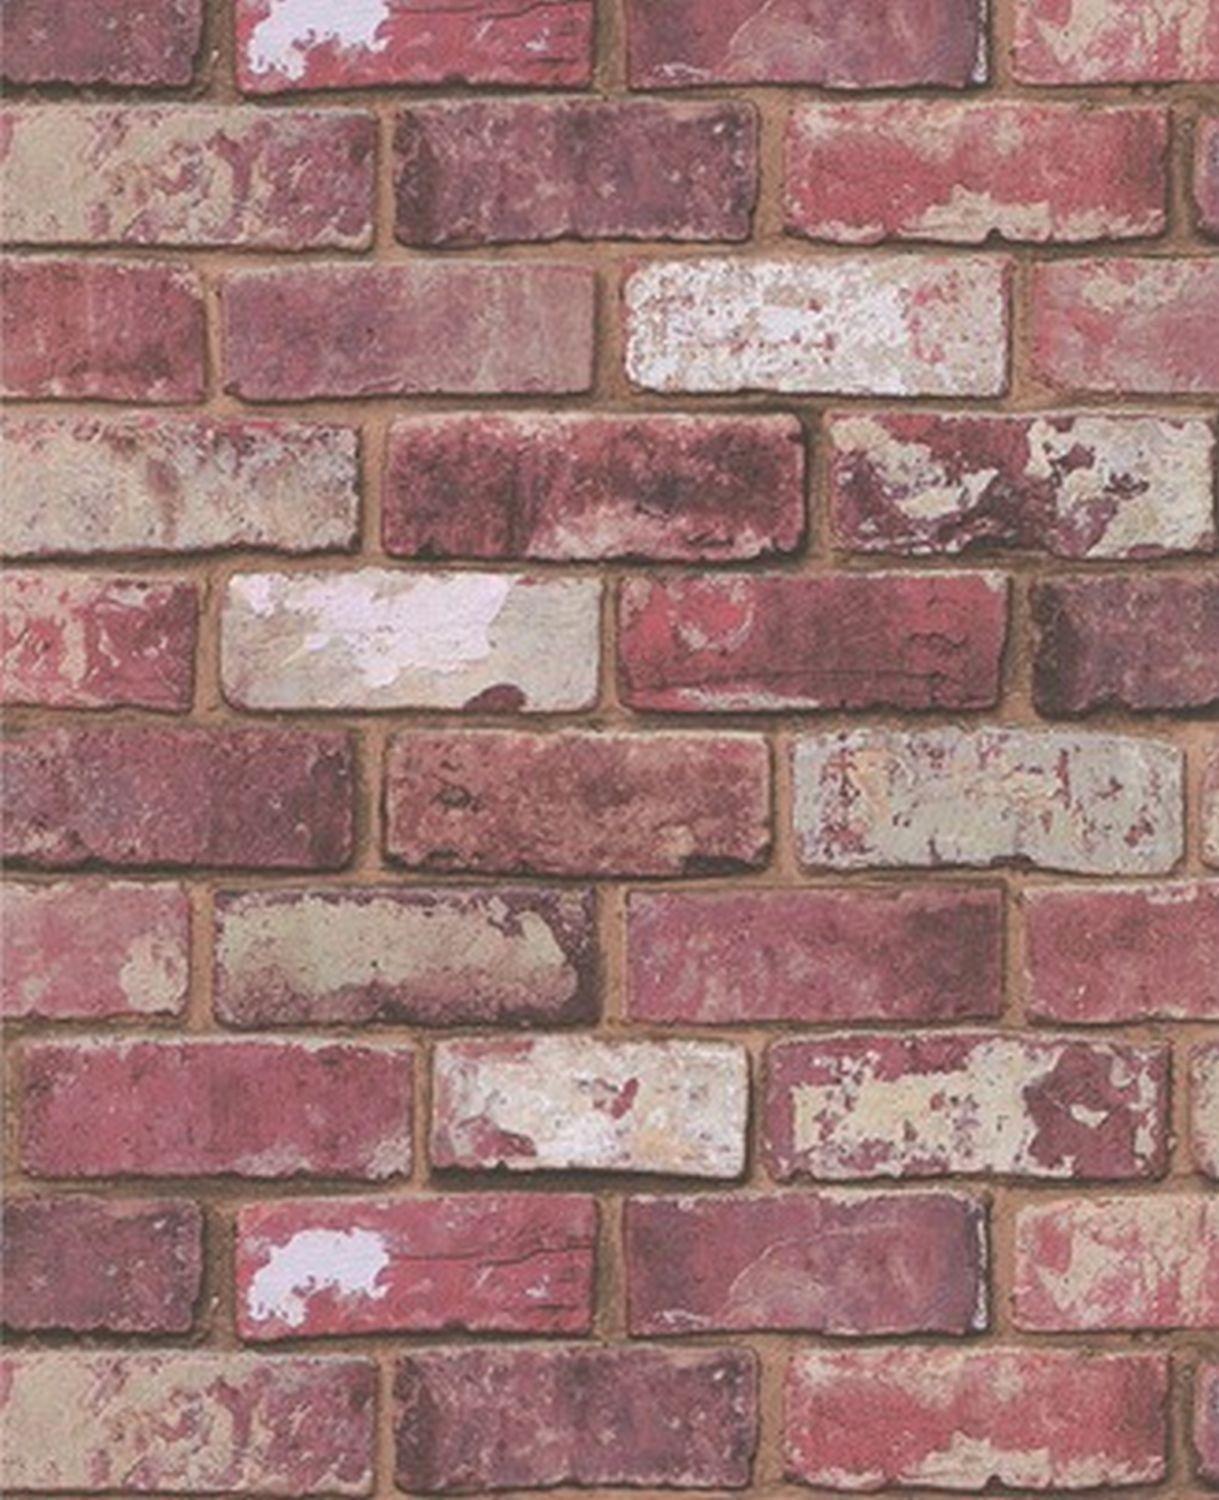 Brick Wallpaper: Amazon.co.uk: DIY & Tools